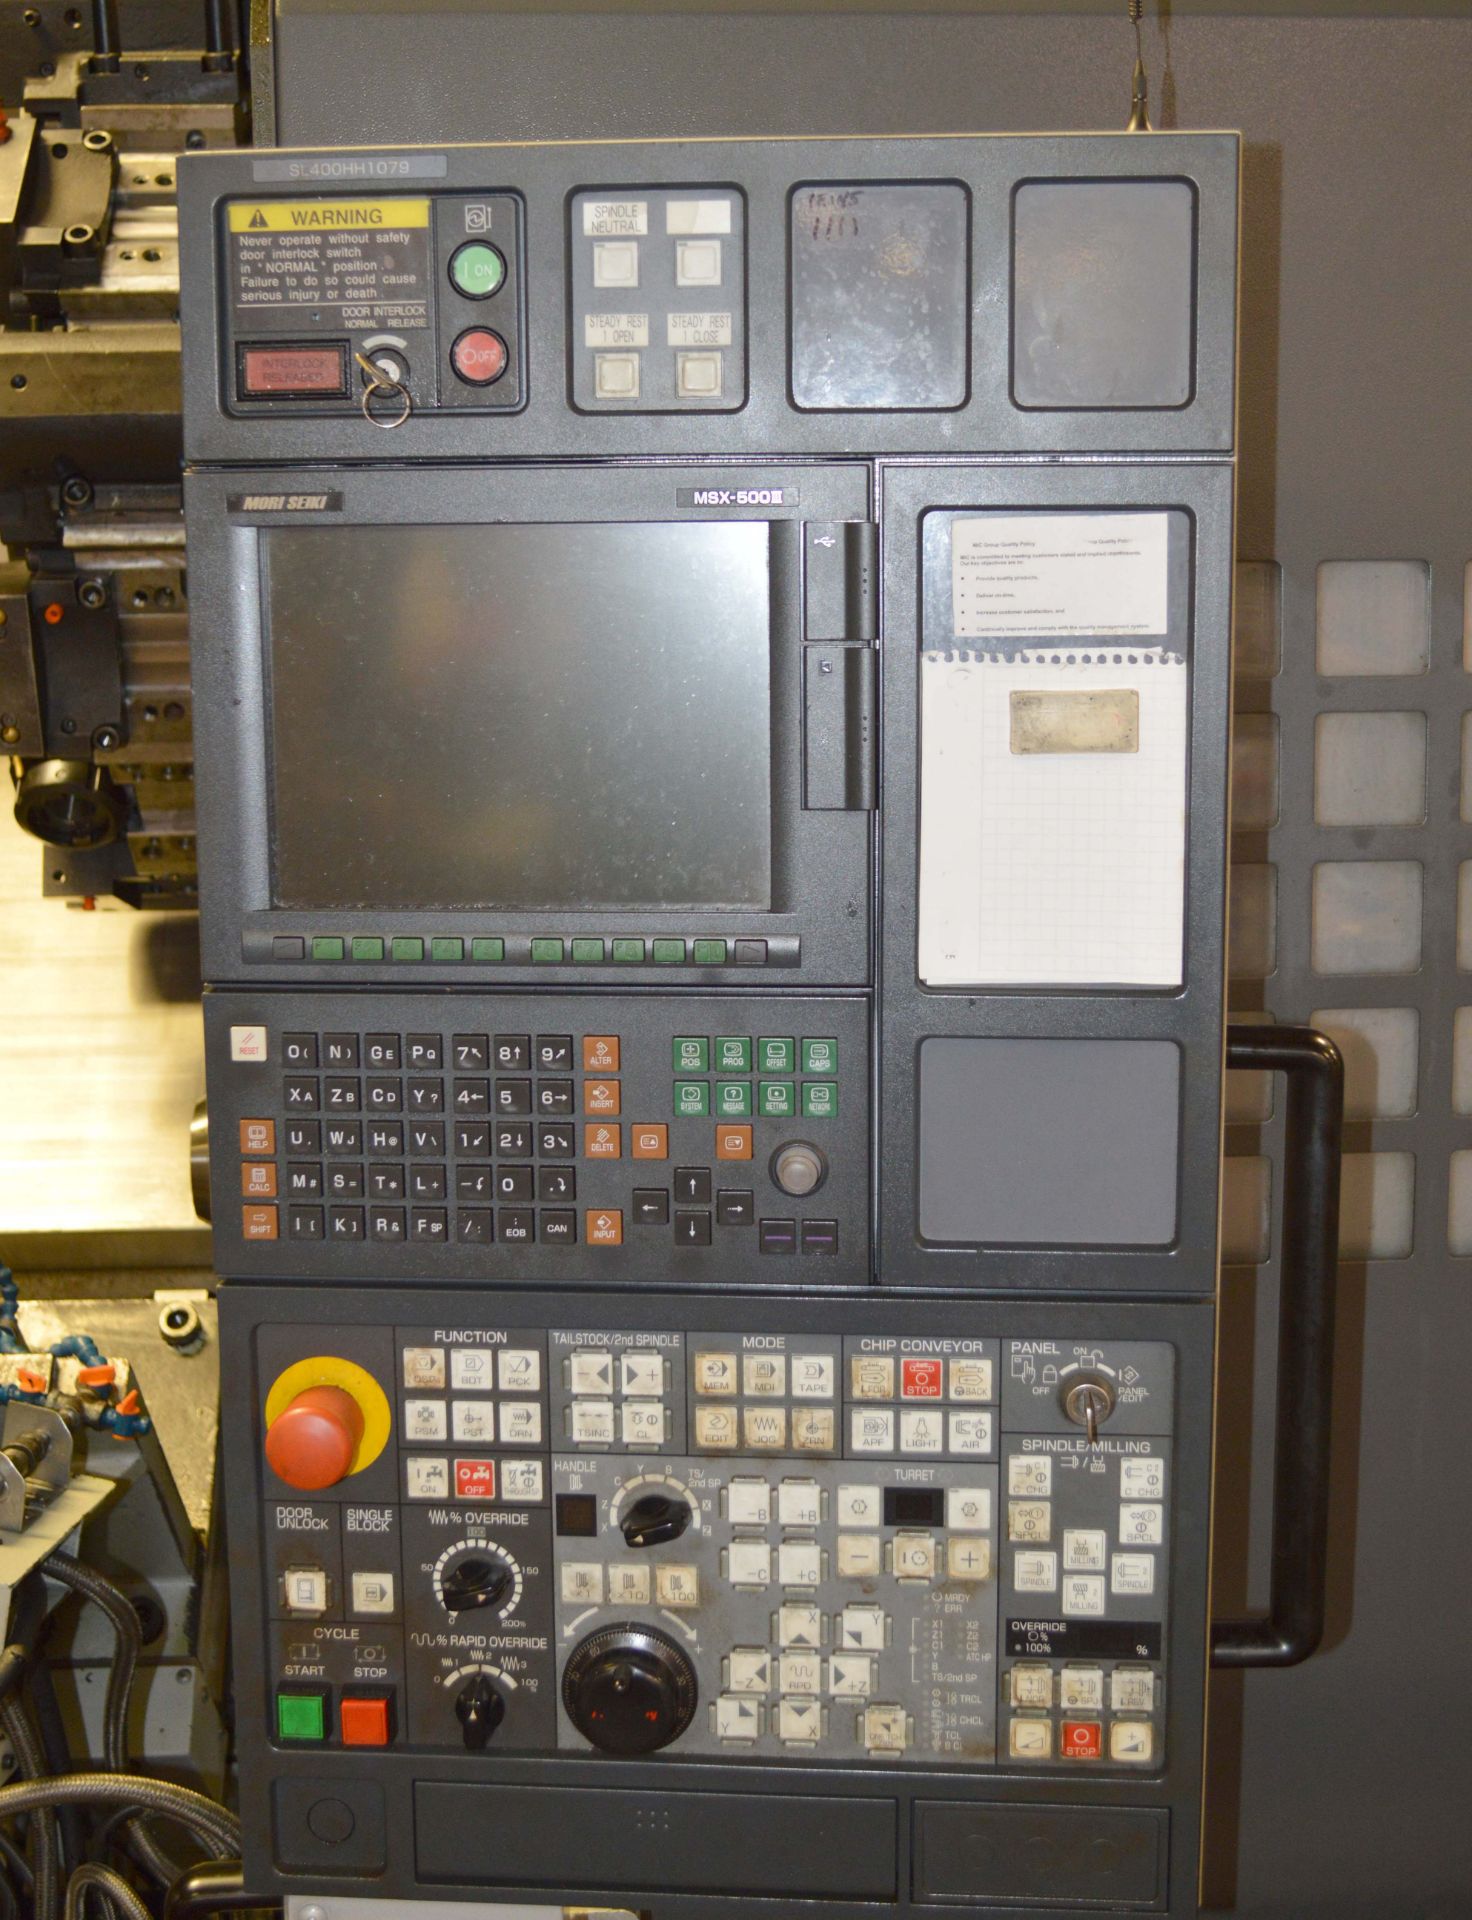 Mori Seiki SL 403BMC/2000 CNC Turning Center with Live Tooling, Mori Seiki MSX 500iii CNC Control - Image 10 of 14